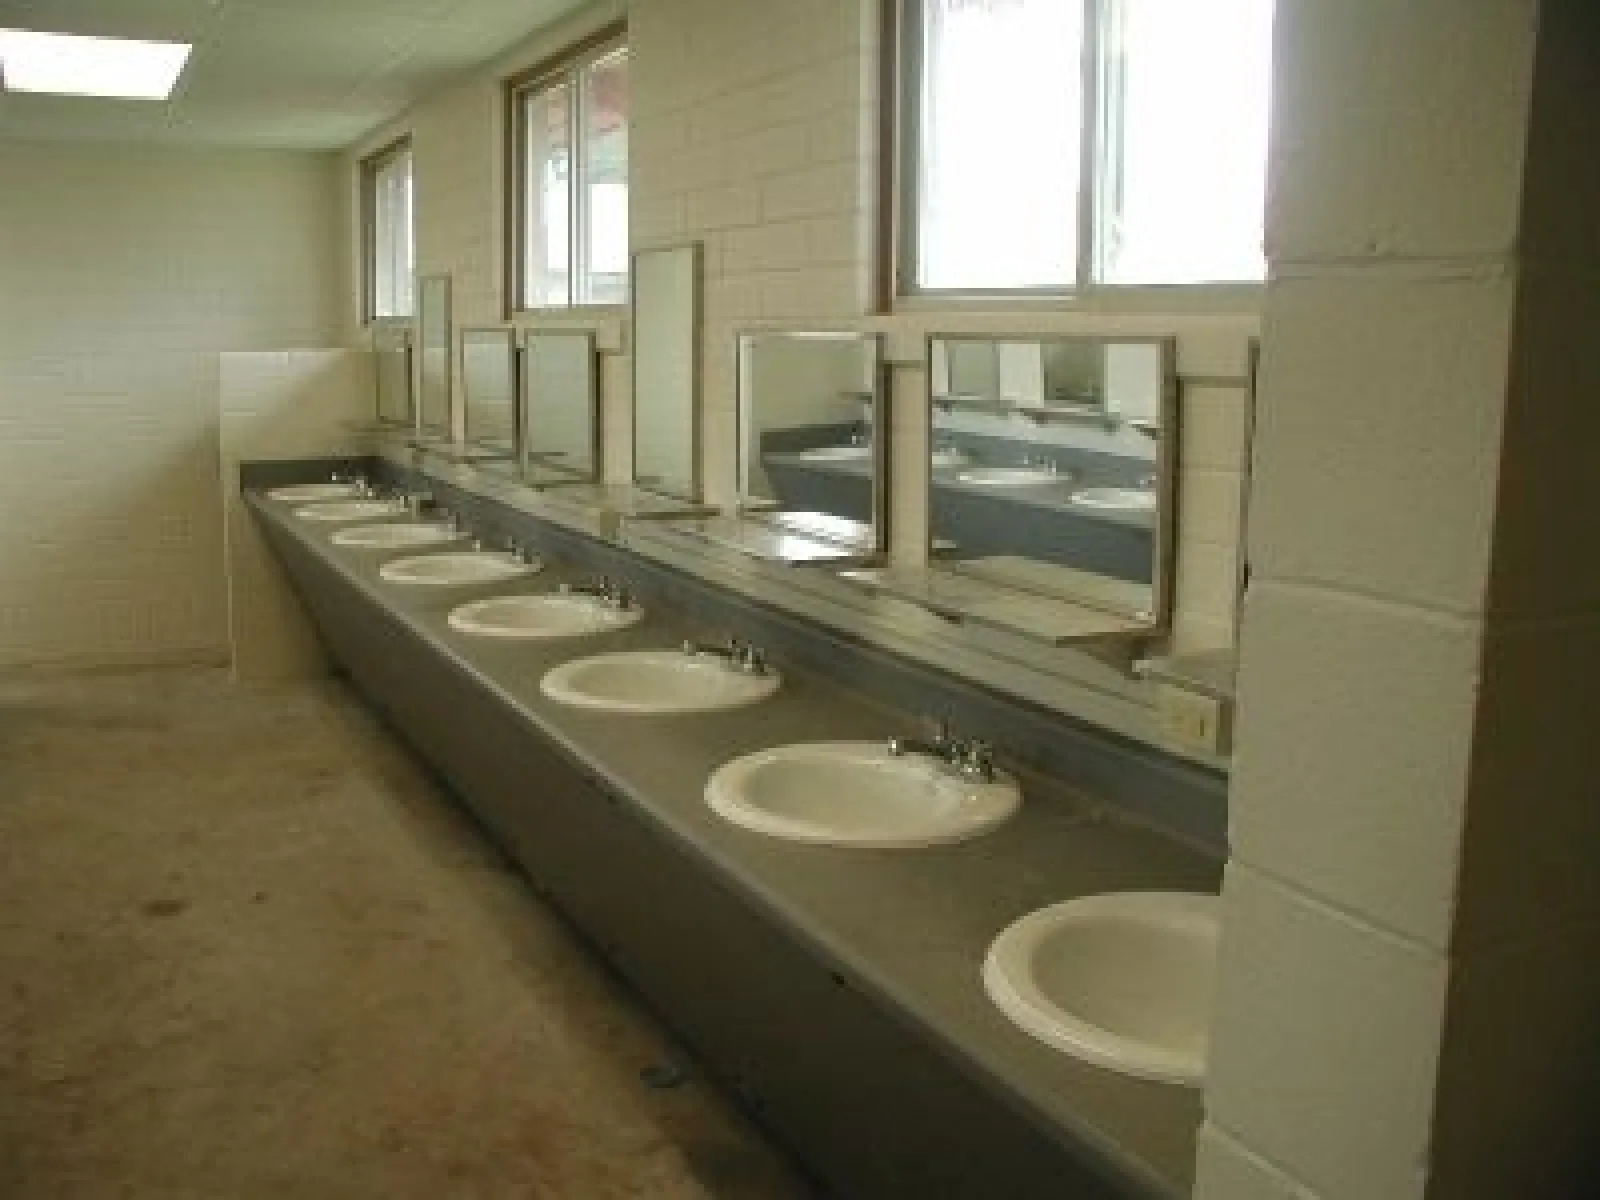 a bathroom with sinks